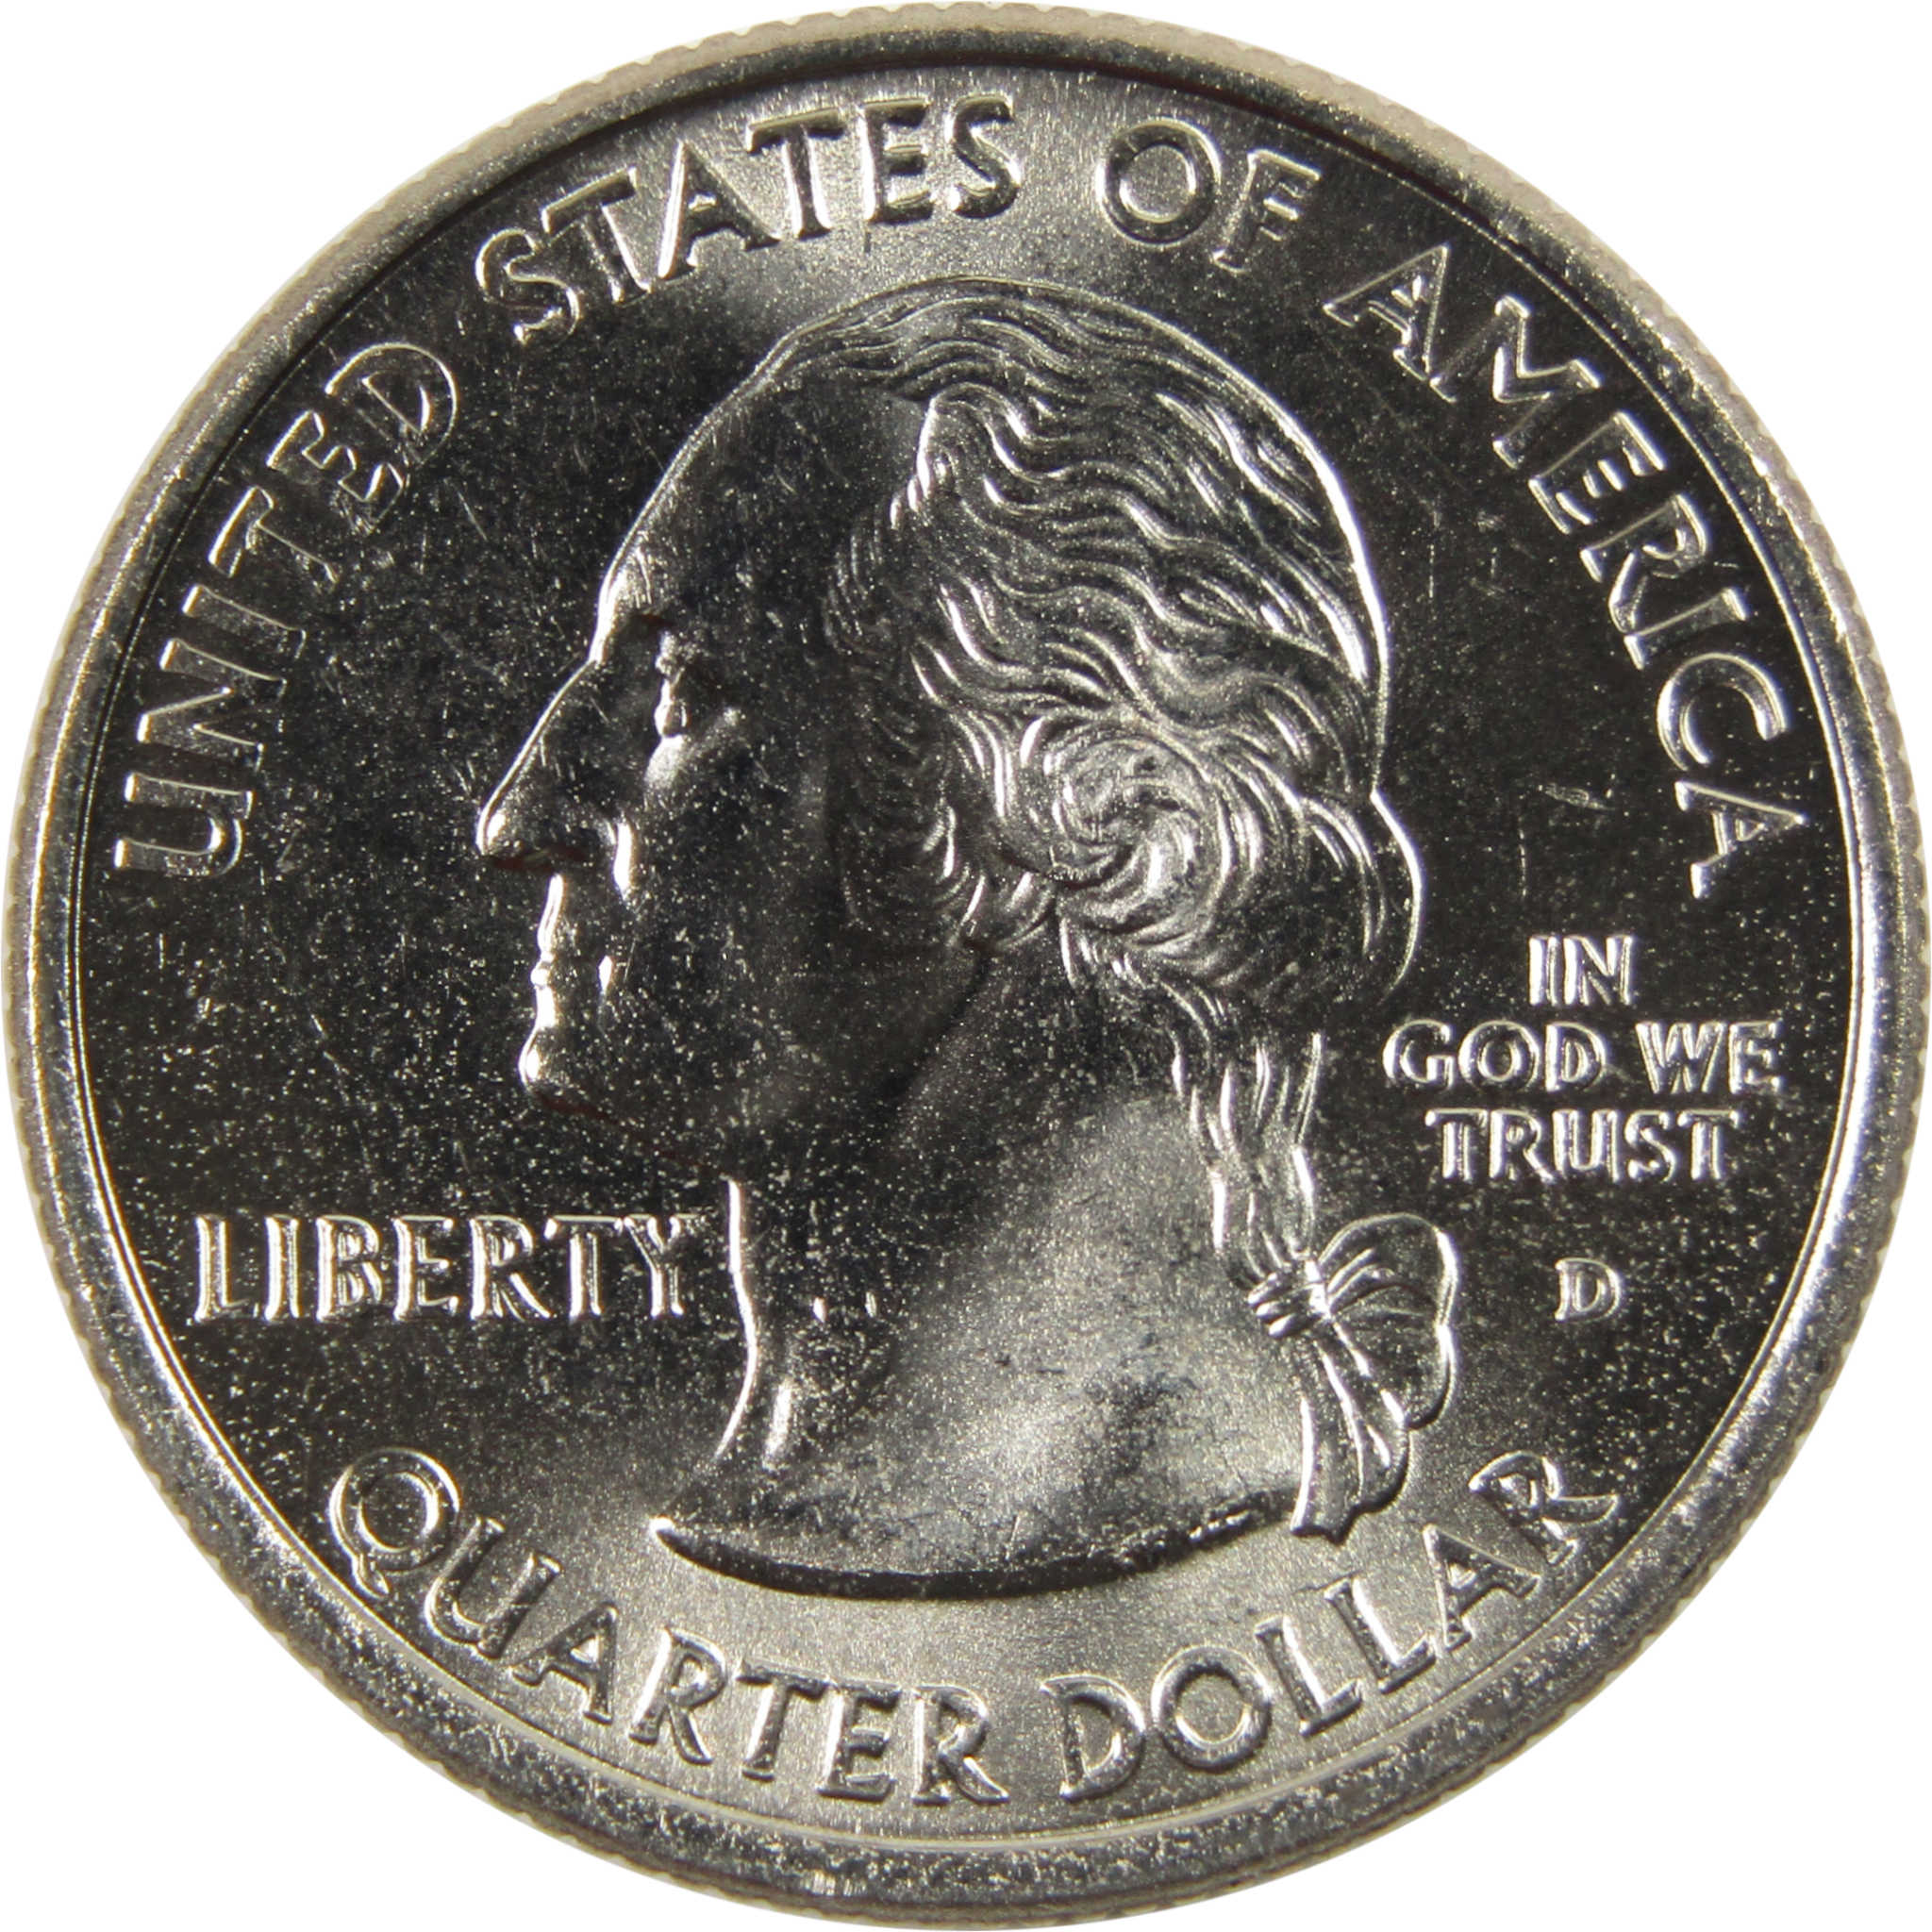 2007 D Idaho State Quarter BU Uncirculated Clad 25c Coin